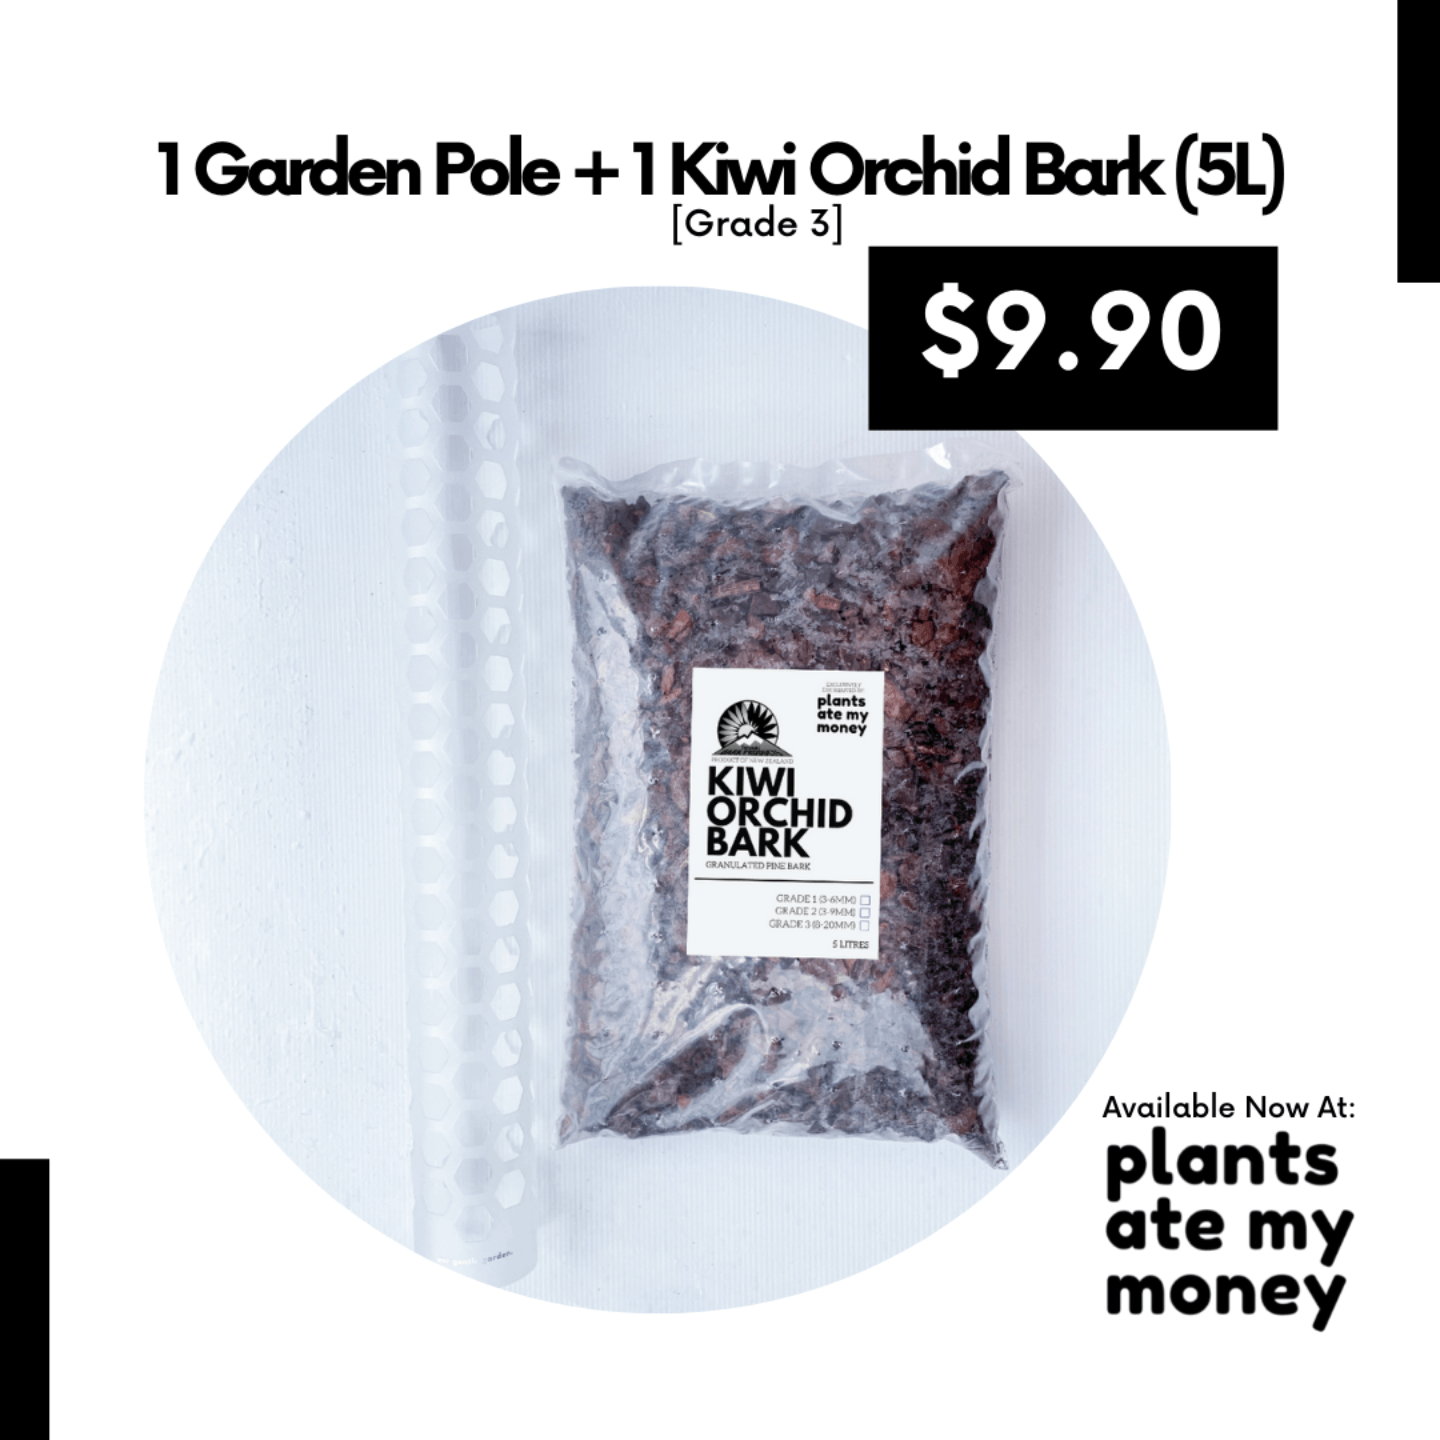 1 Garden Pole + 1 Kiwi Orchid Bark 5L